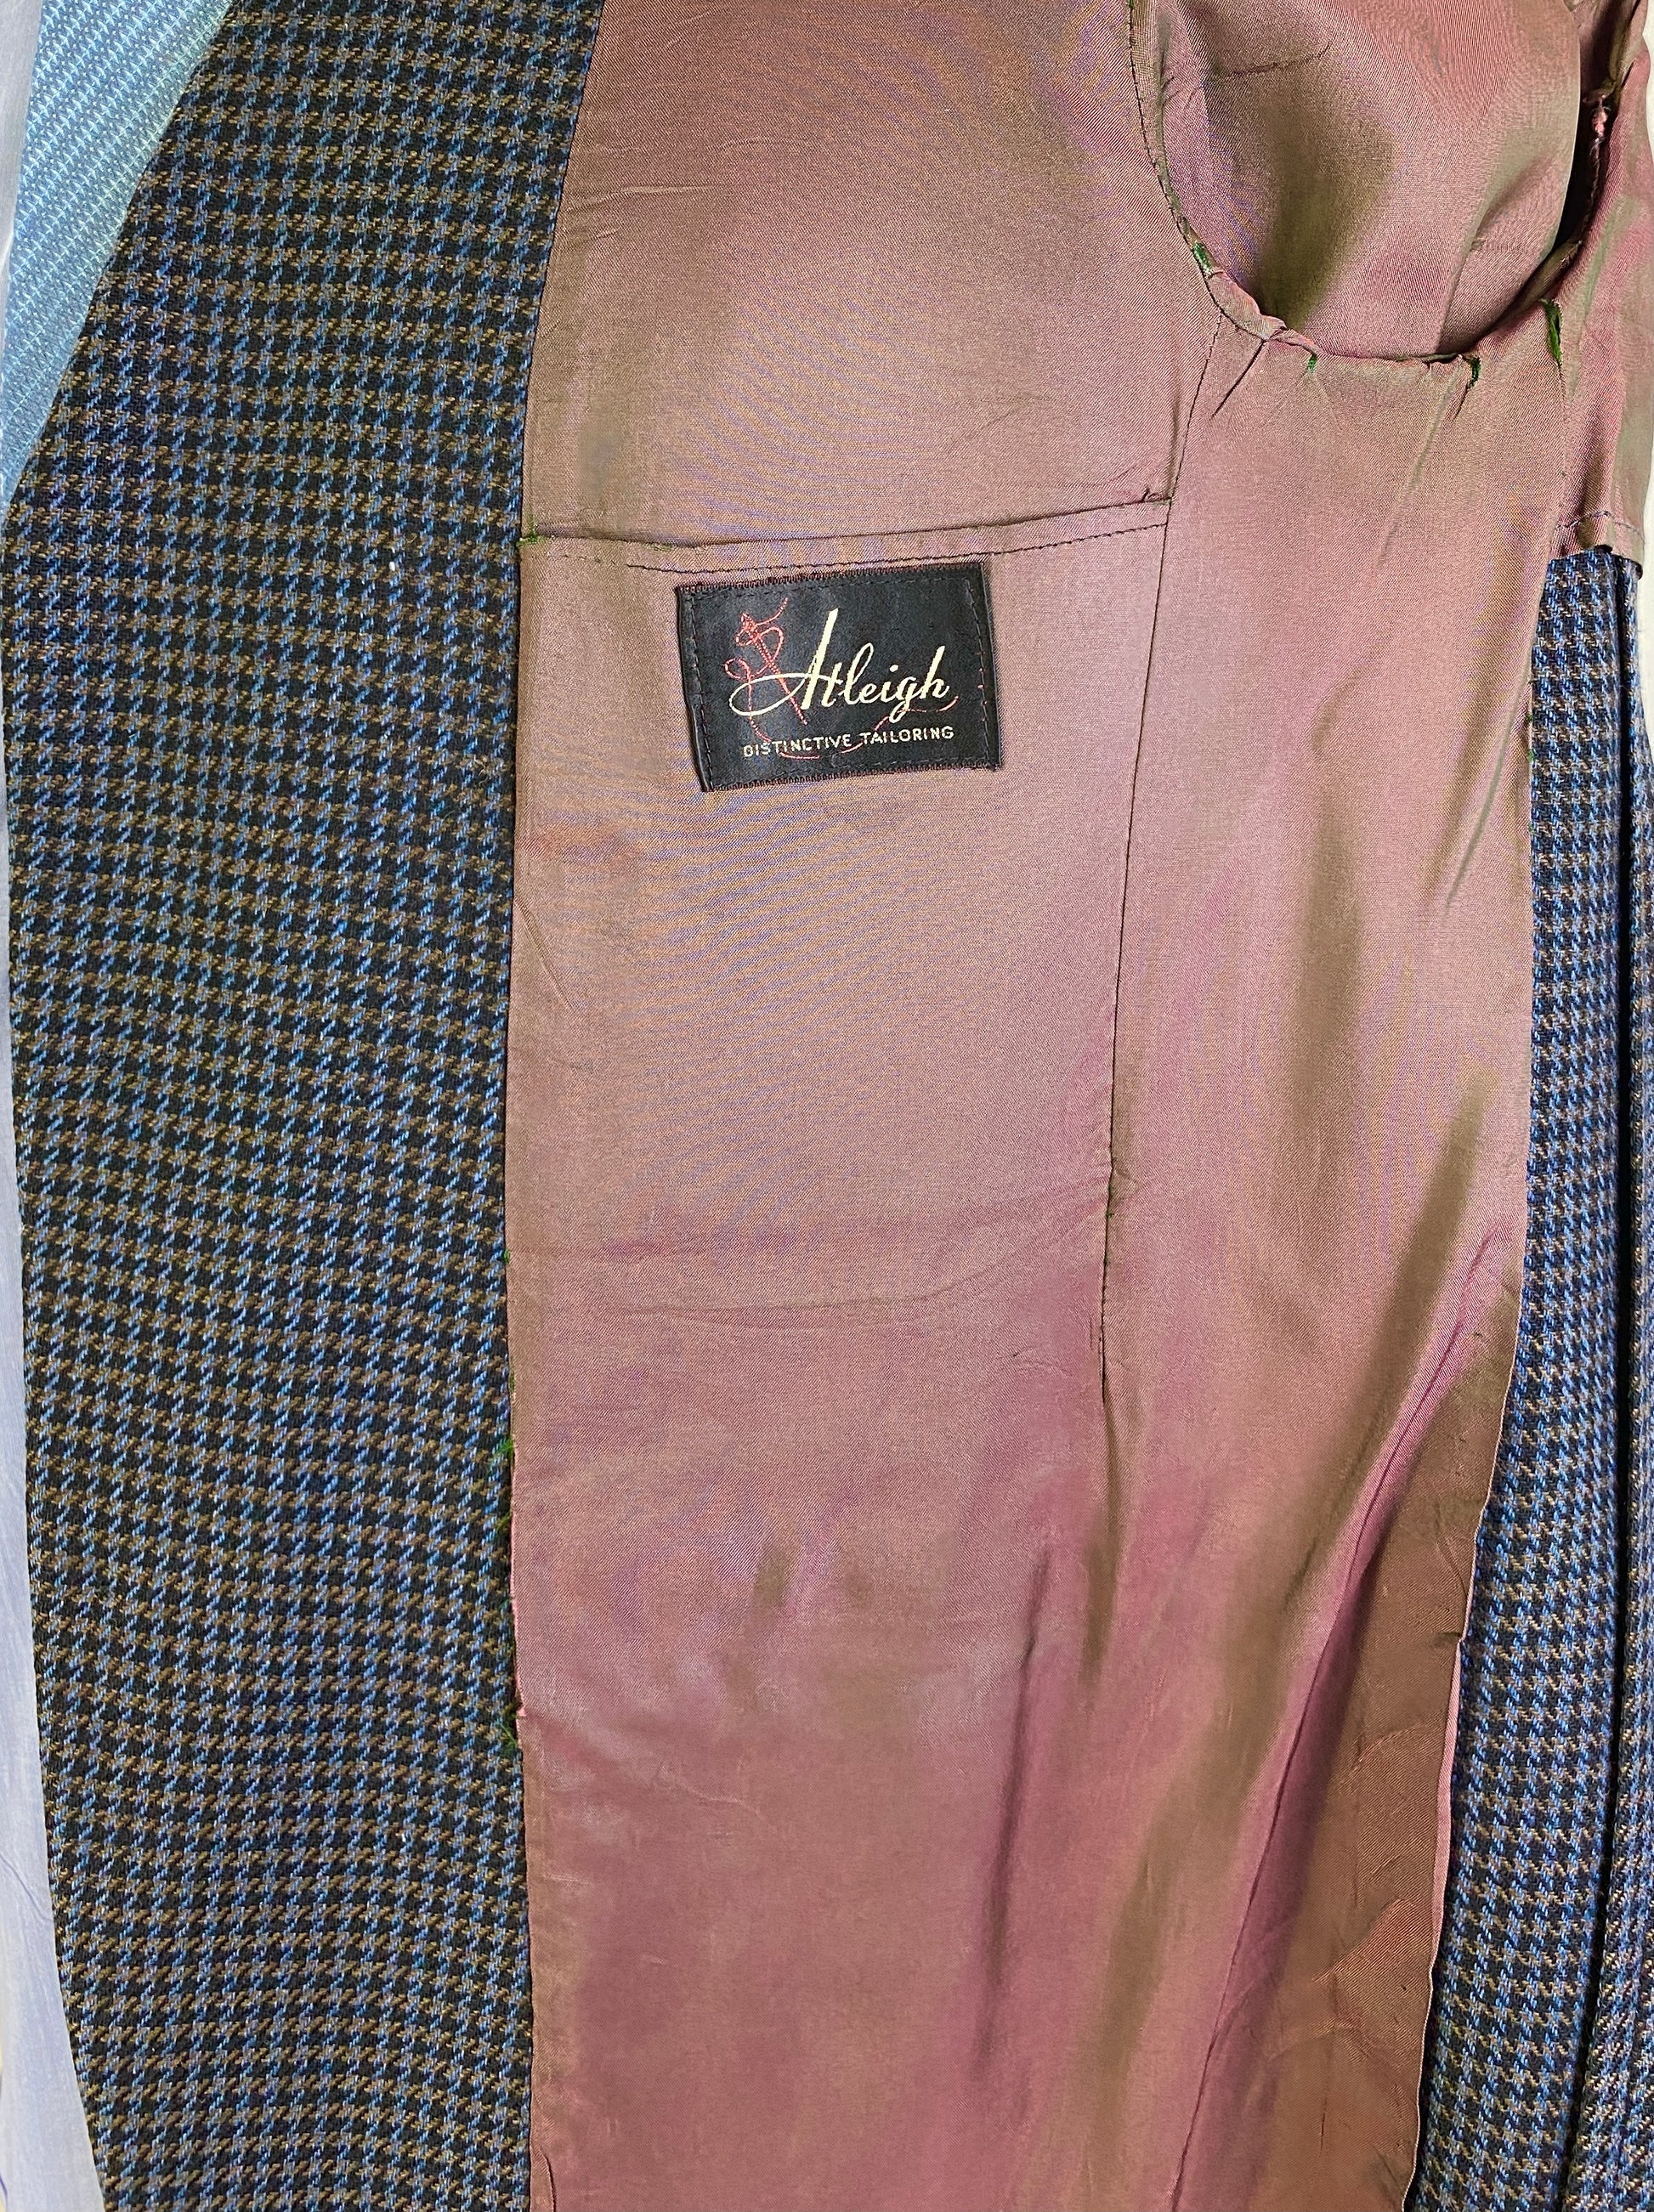 1960s Men's Blazer, Black/ Blue Houndstooth Jacket, C40T, Atleigh Tailoring